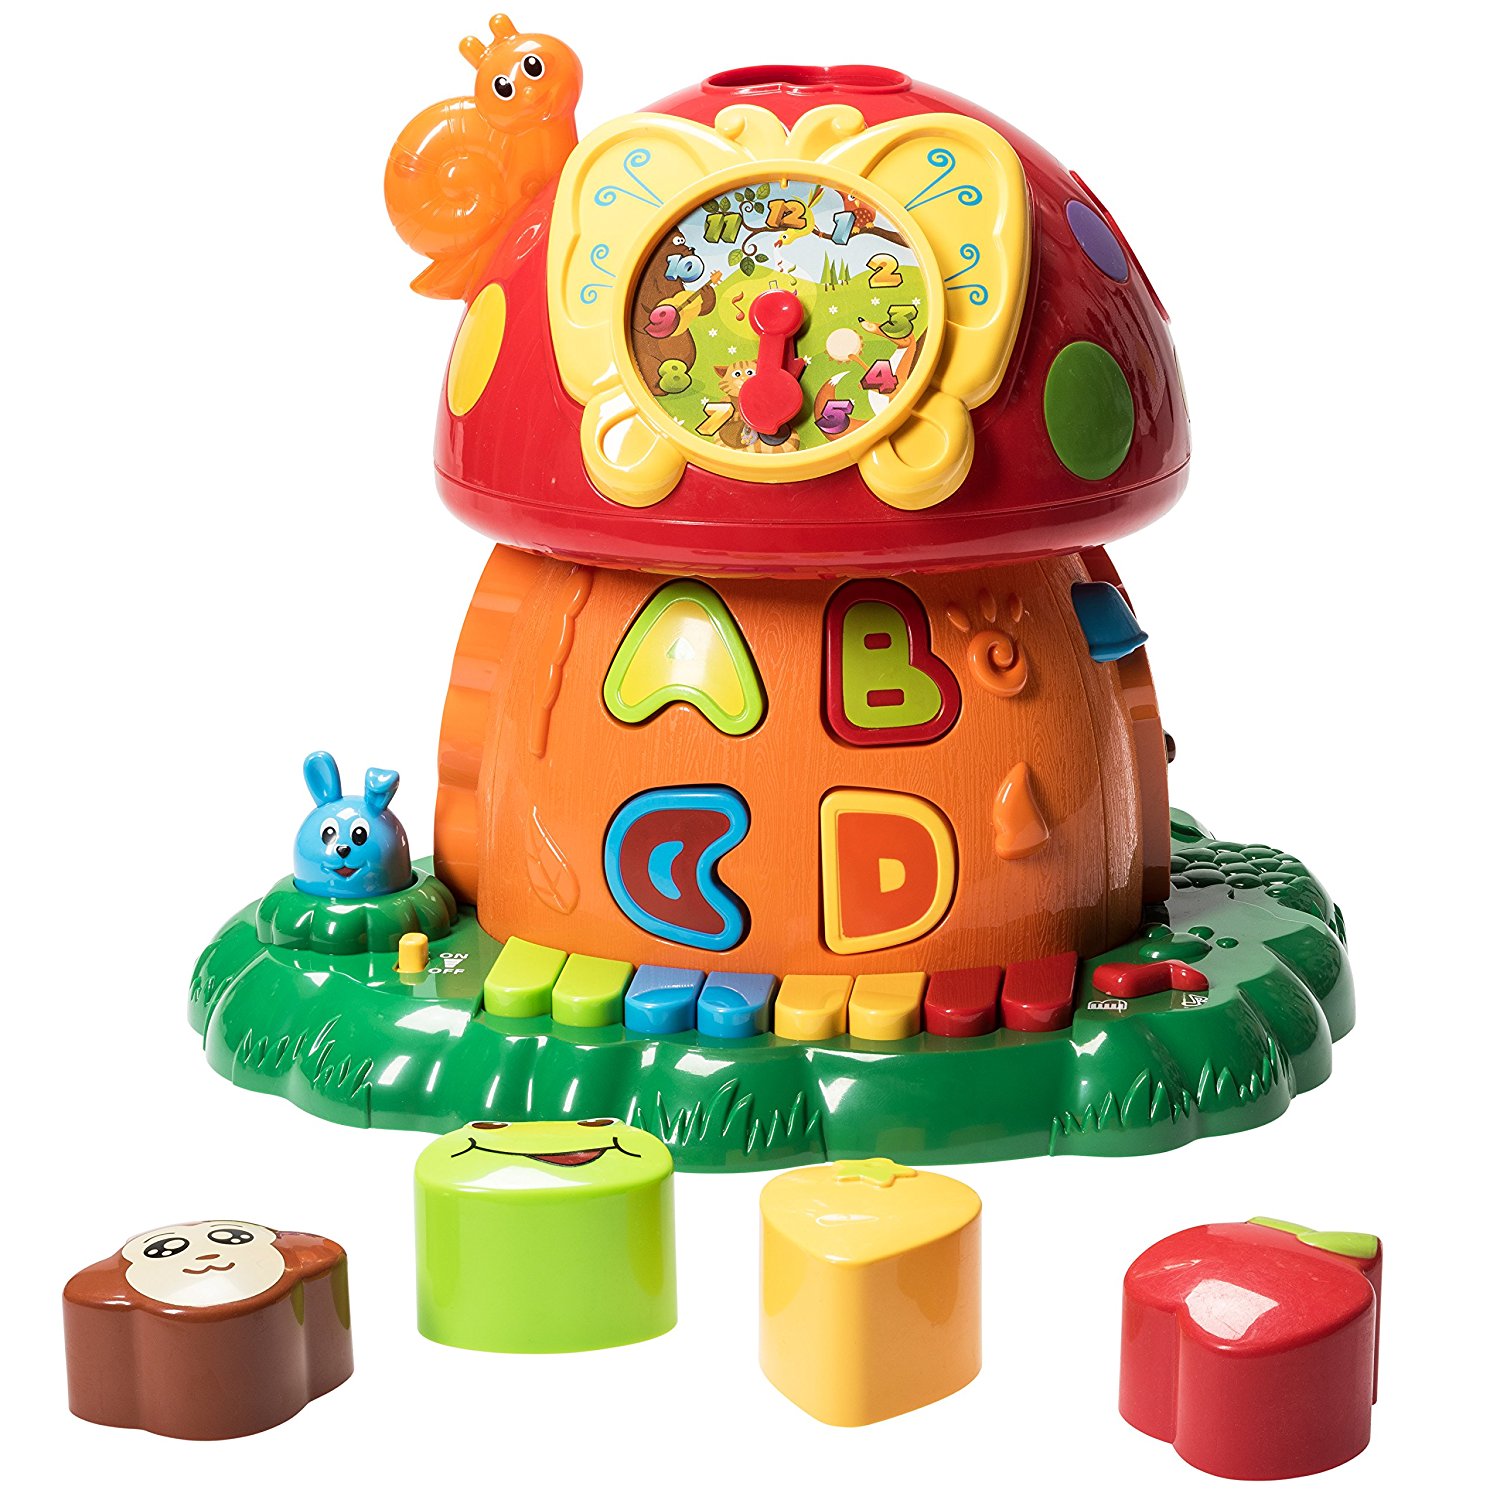 Amazon.com: Prextex Christmas Toy Gift Electronic Magic Mushroom ...